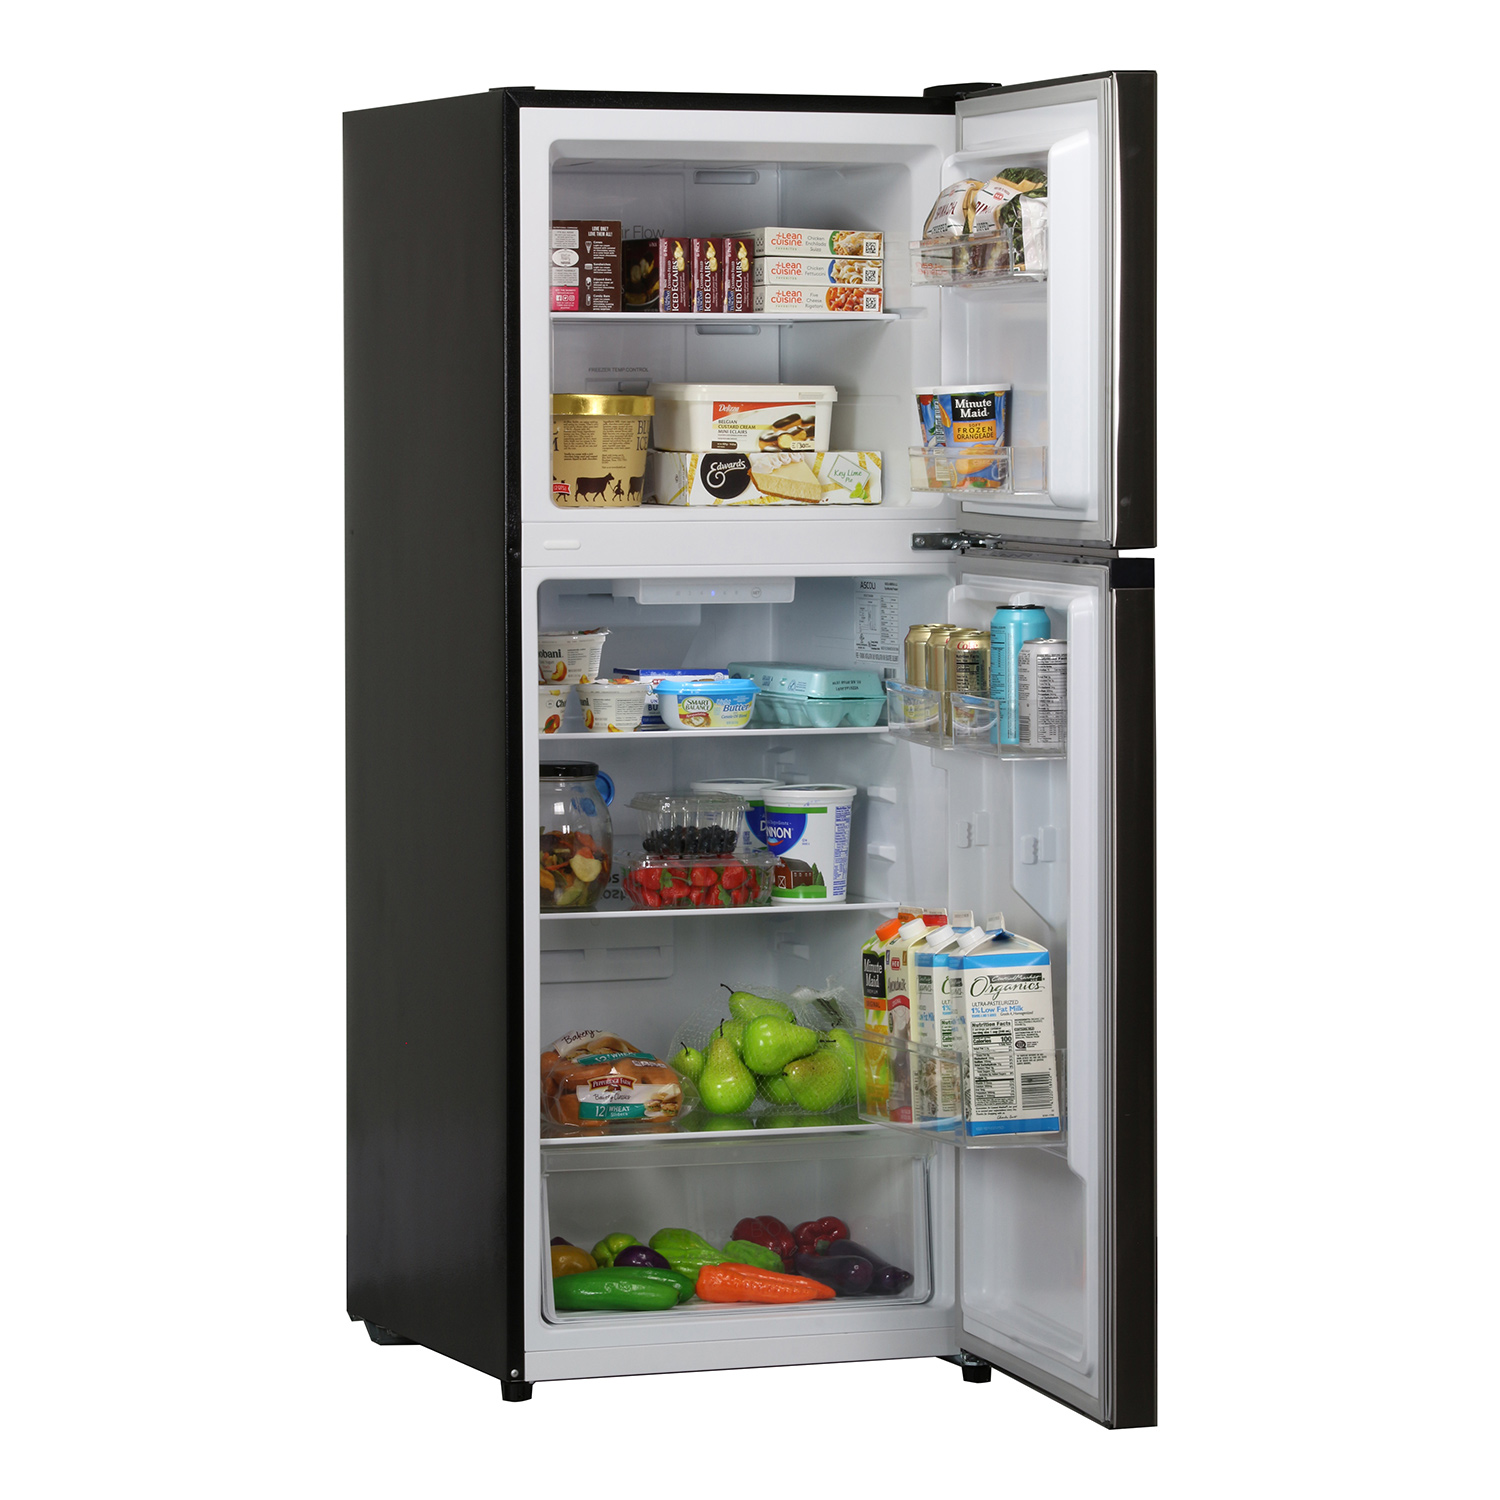 ATFR 1050 ES No Frost <br> Top Mounted Refrigerator